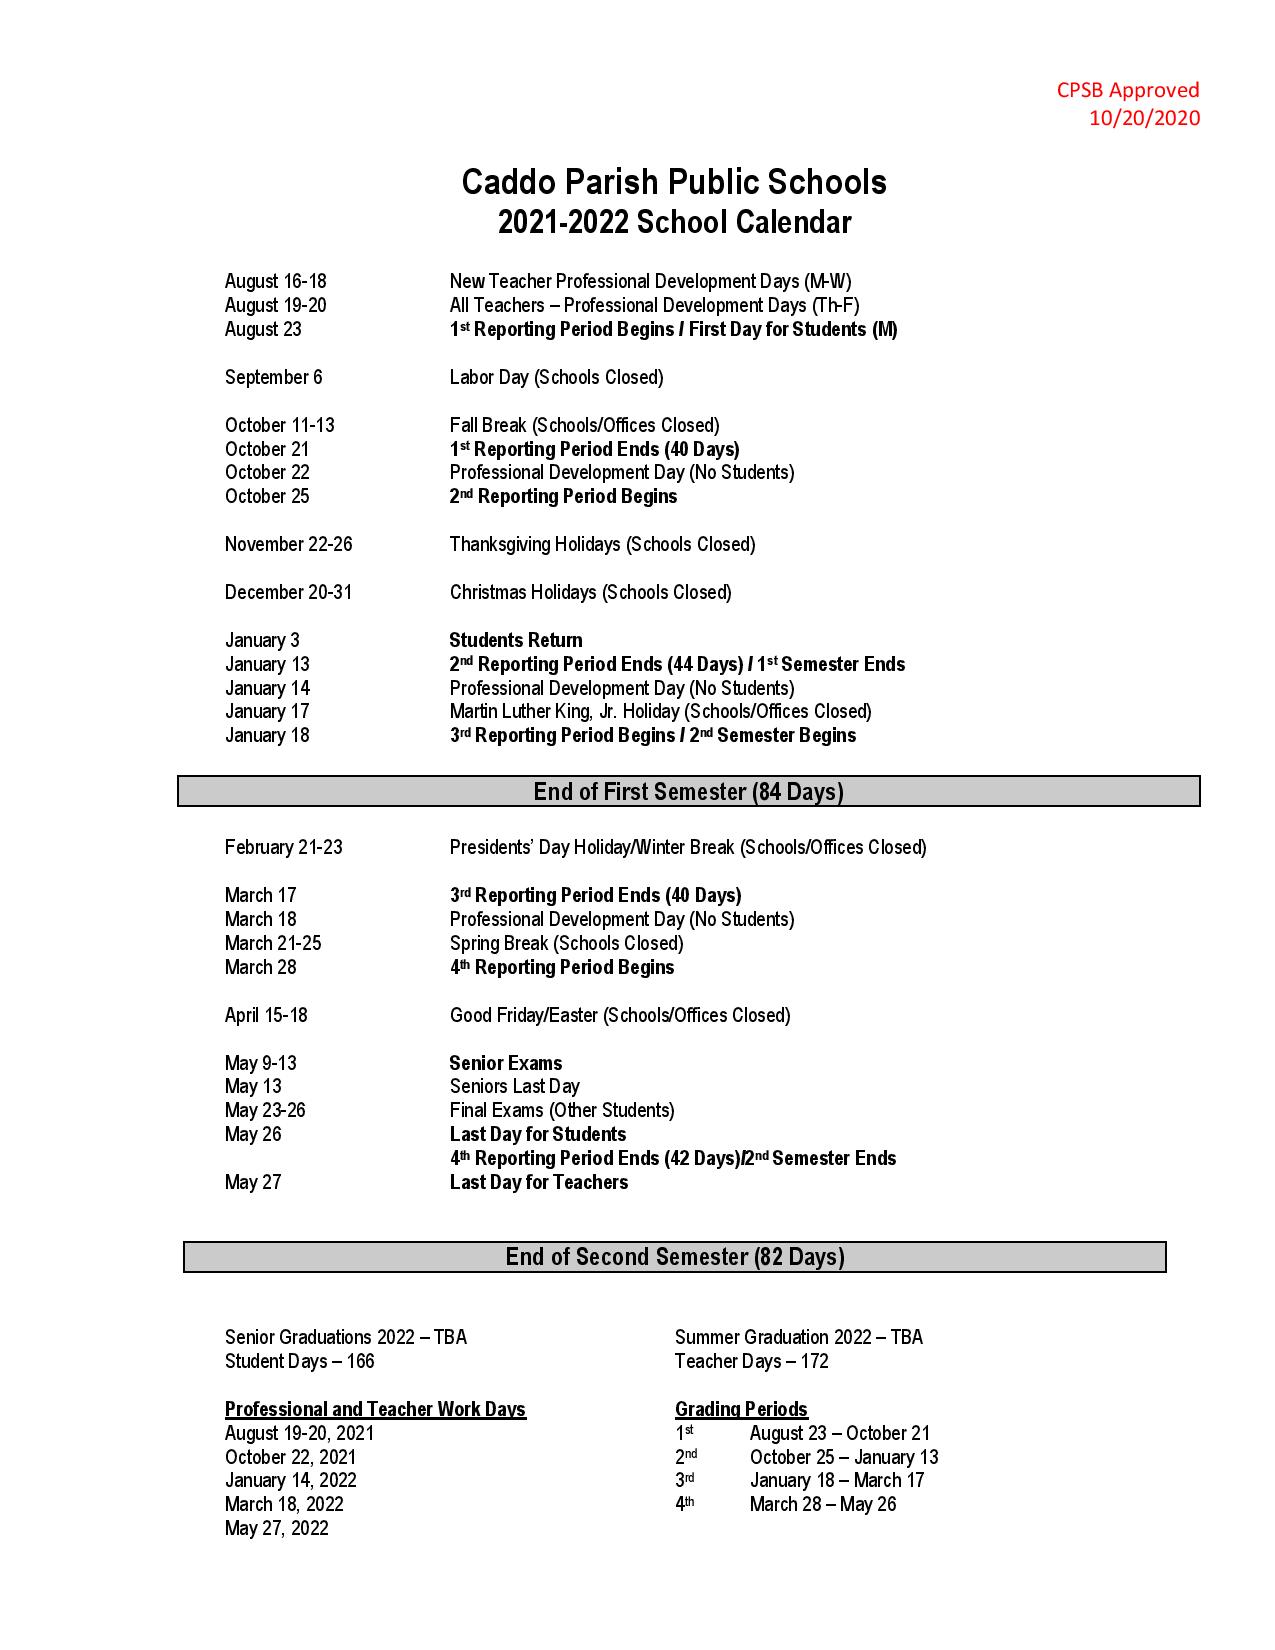 Caddo Parish Public Schools Calendar 20212022